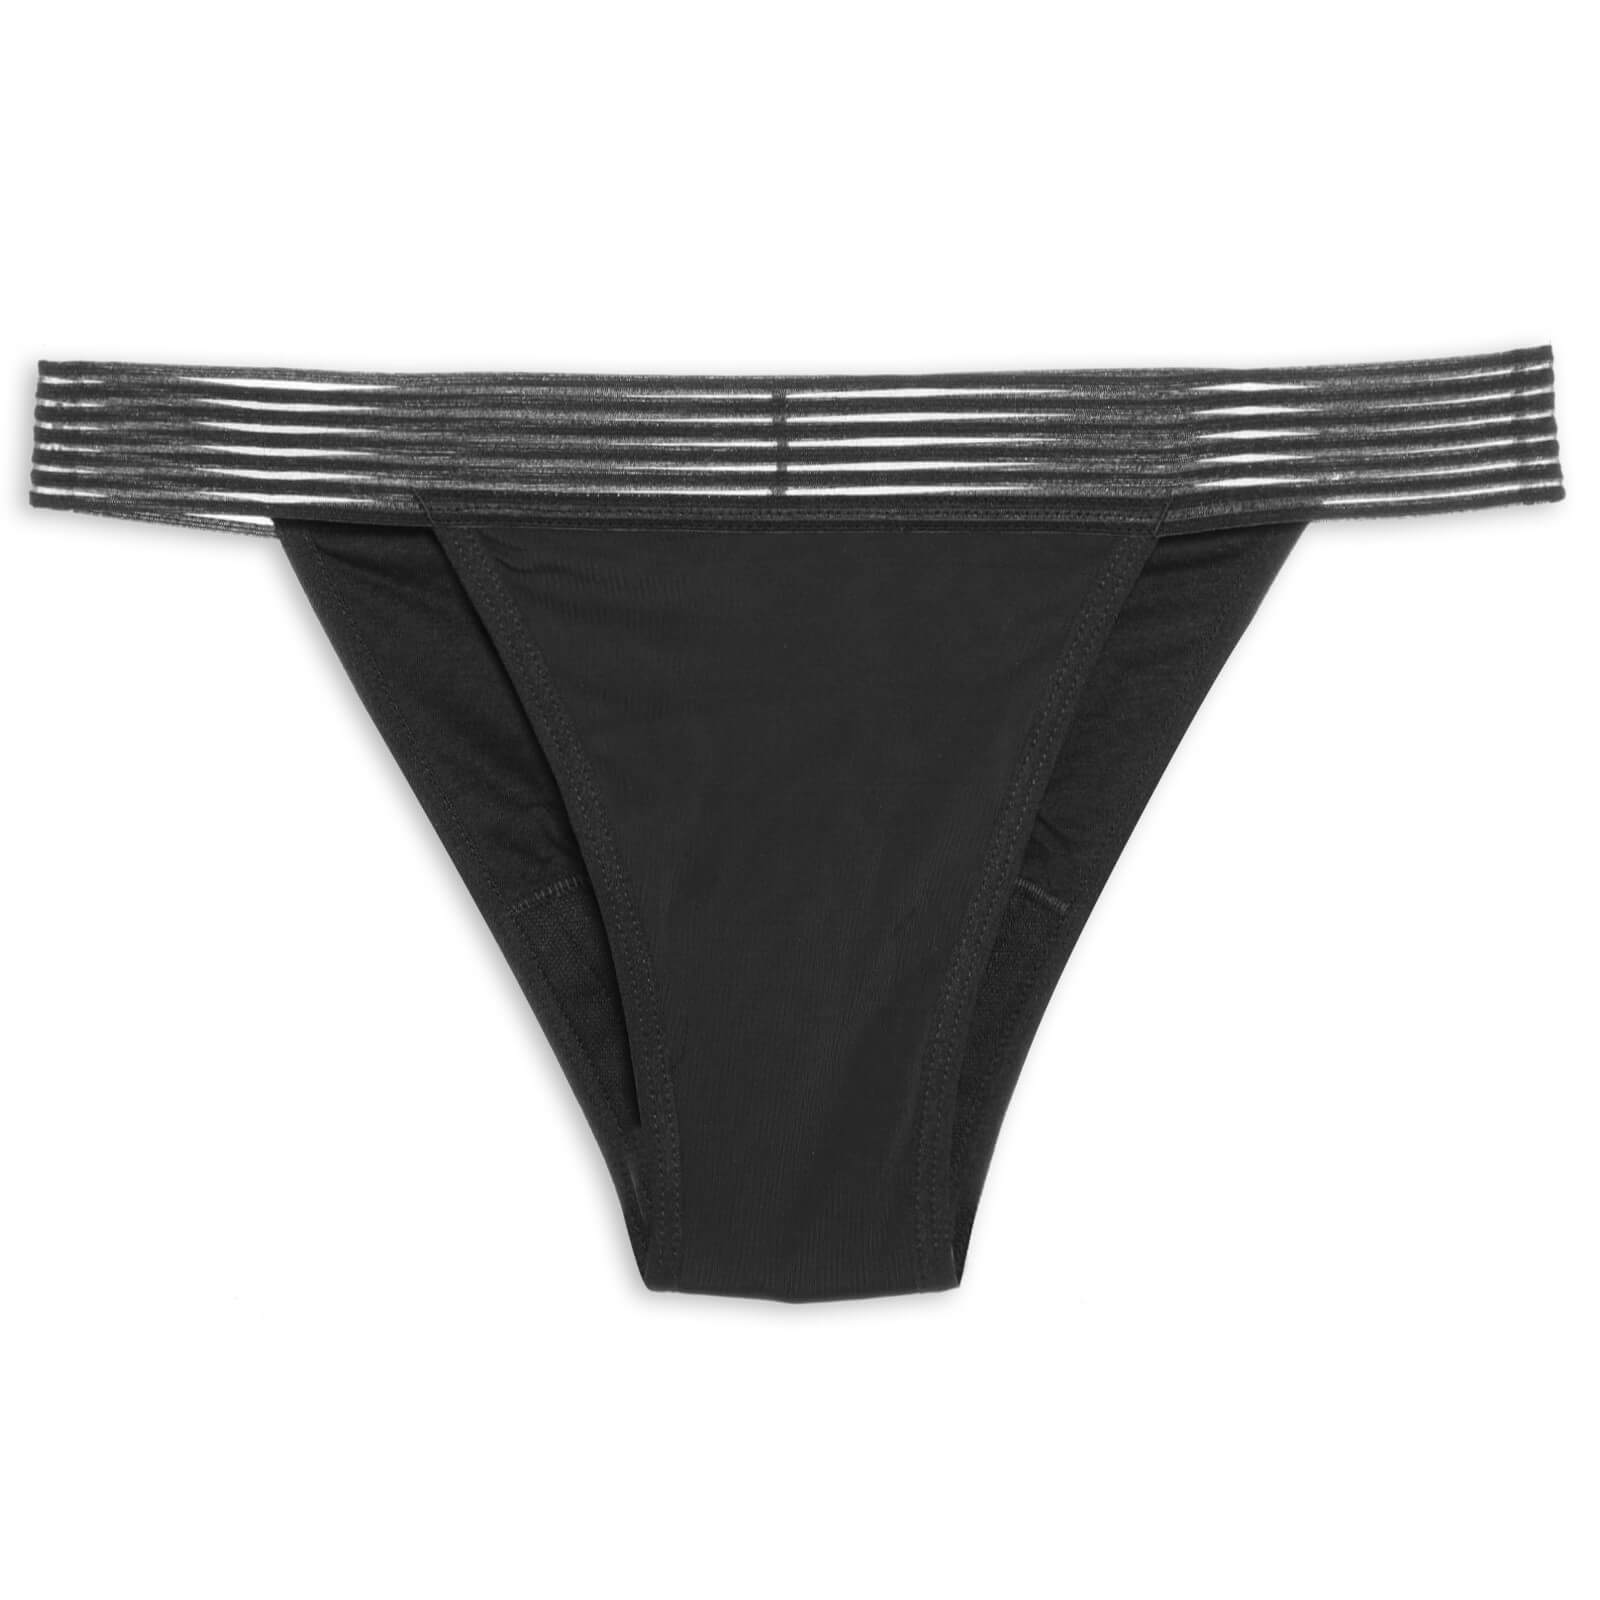 Bfree Intimate Apparel Black Full Brief Underwear Size 12 / L(s)